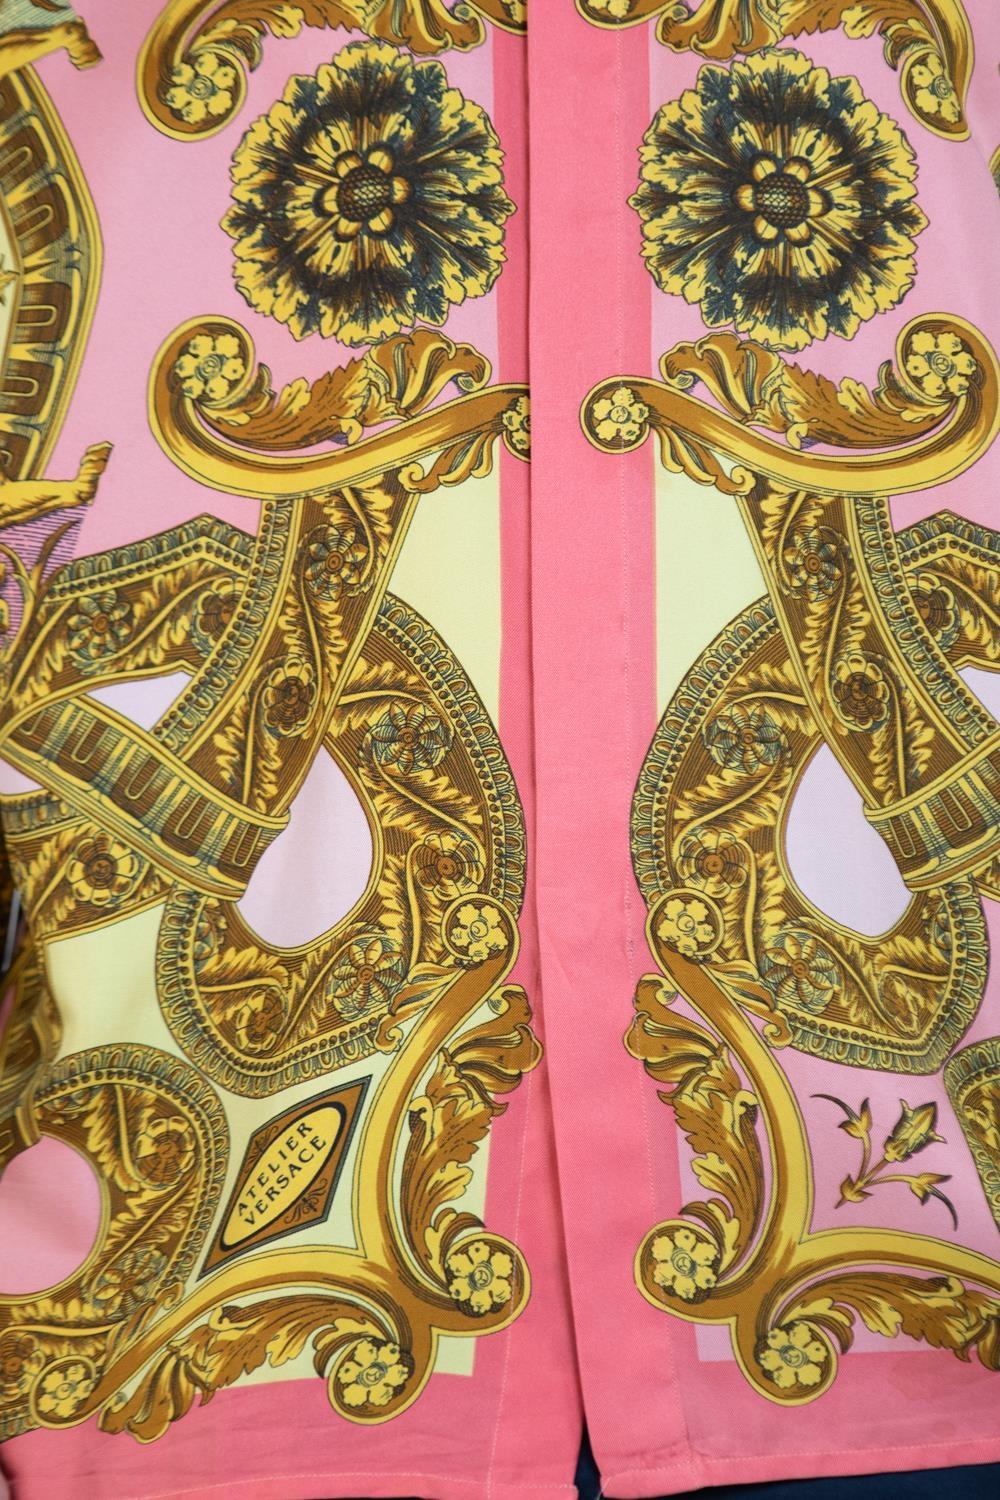 1990S Gianni Versace Pink & Gold Silk Dress Shirt With Original Baroque Scrolls For Sale 3